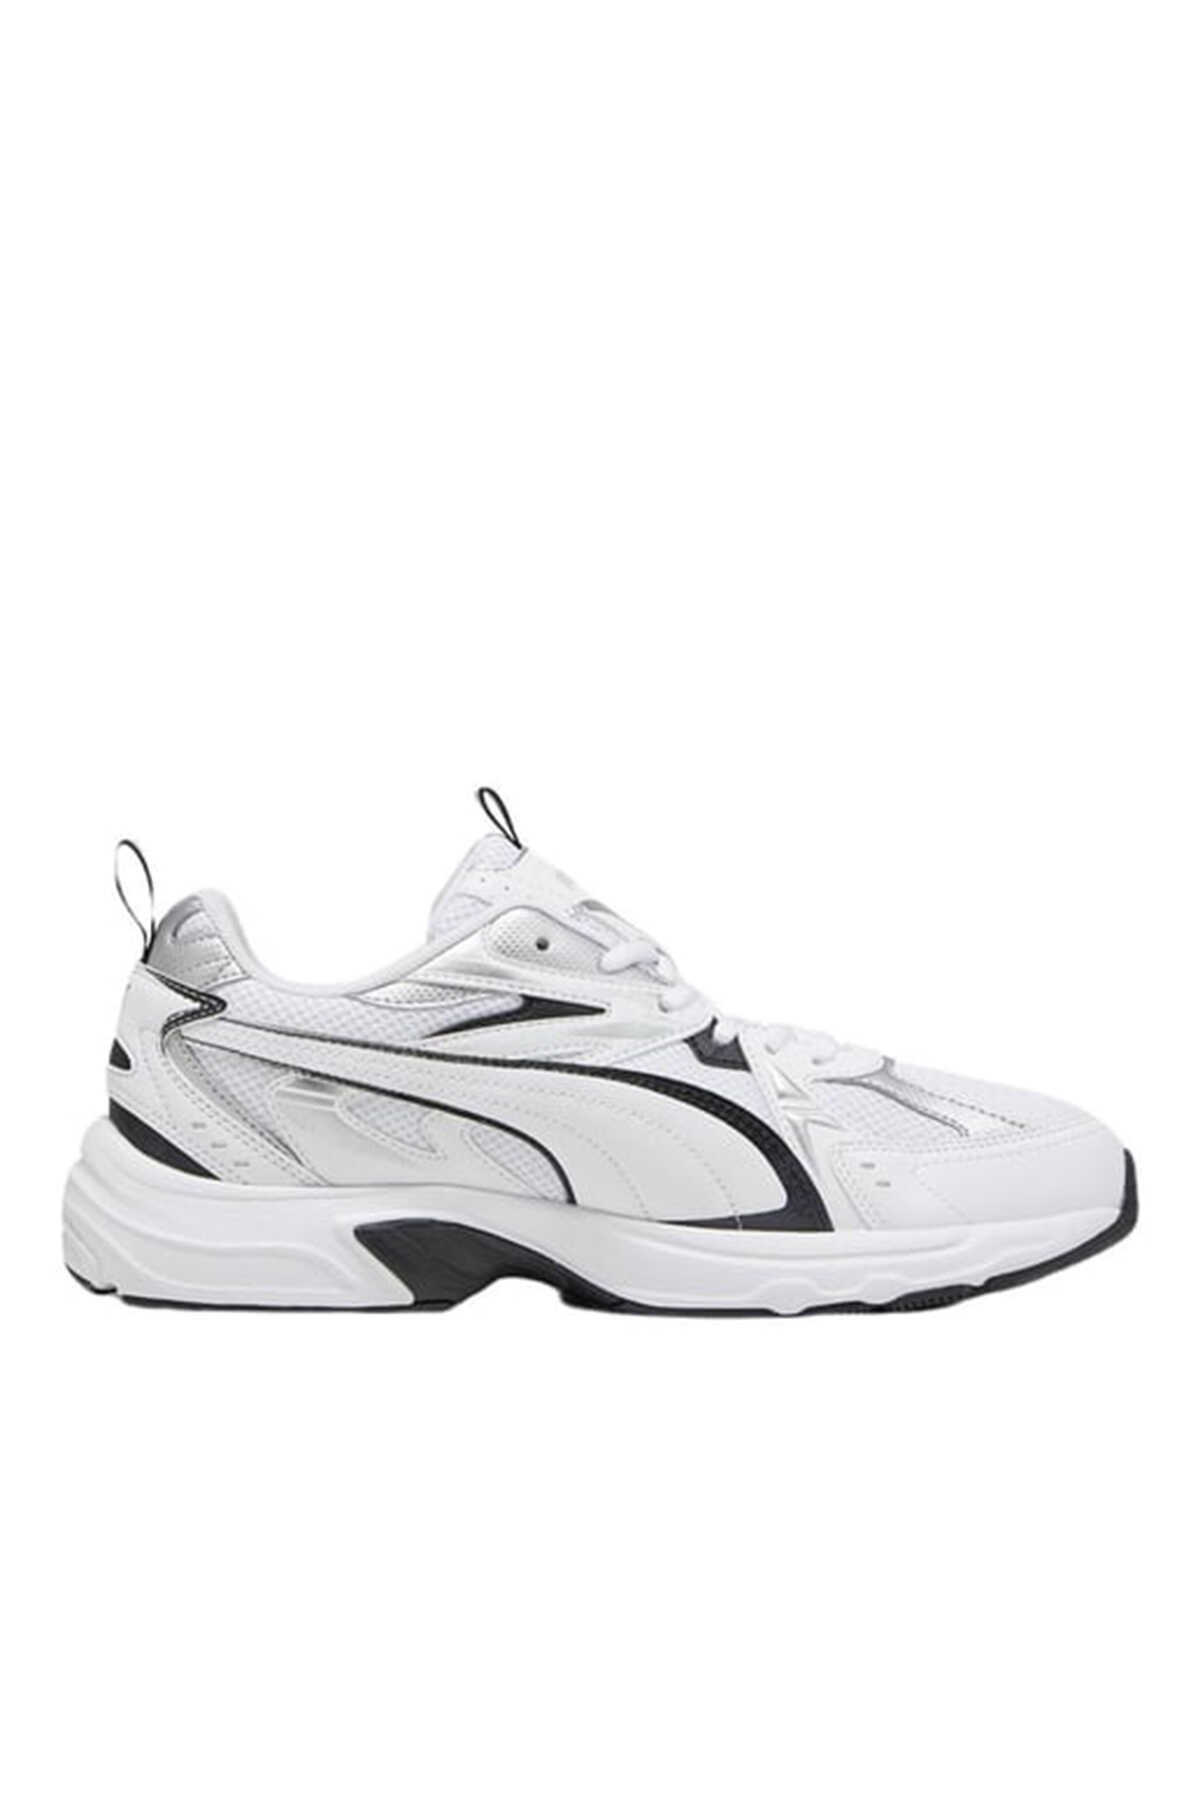 Puma - Puma Milenio Tech Unisex Sneaker Ayakkabı Beyaz / Siyah